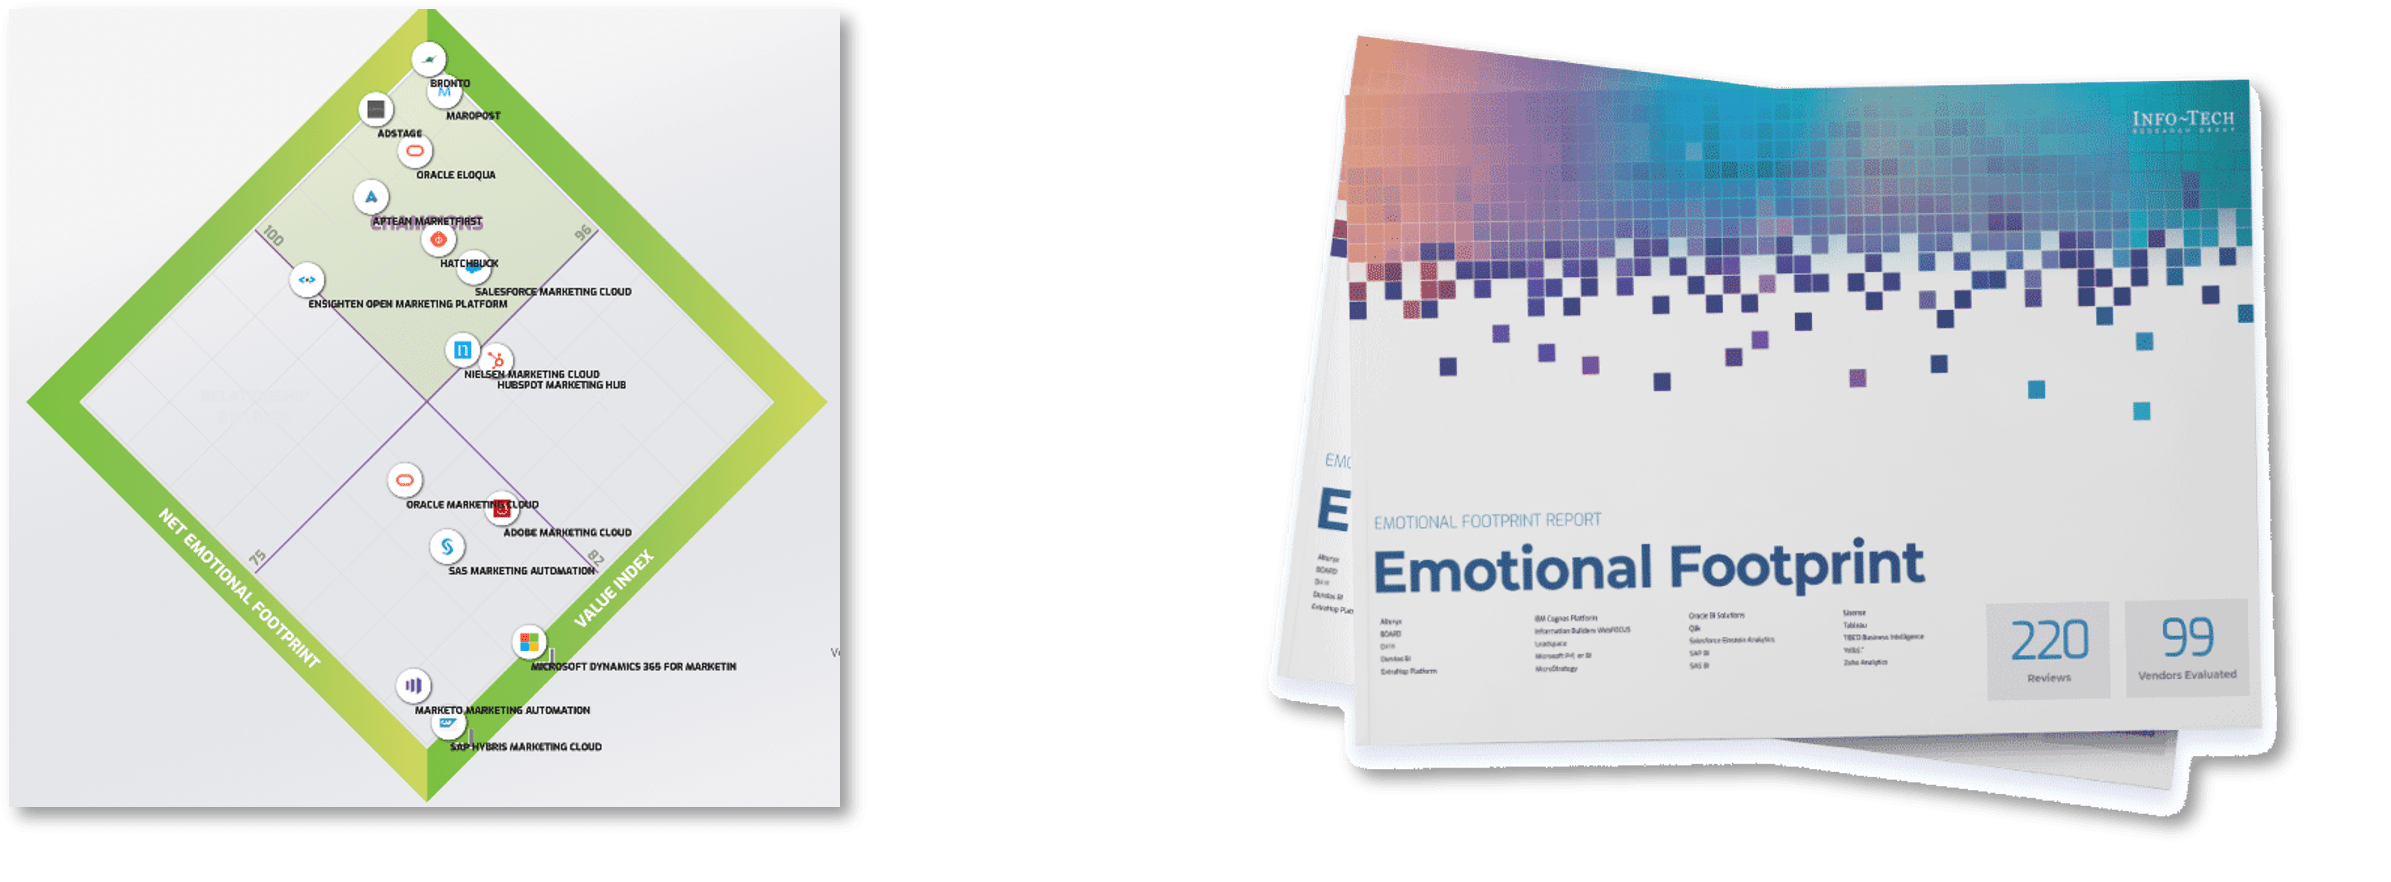 An image of SoftwareReviews Emotional Footprint.